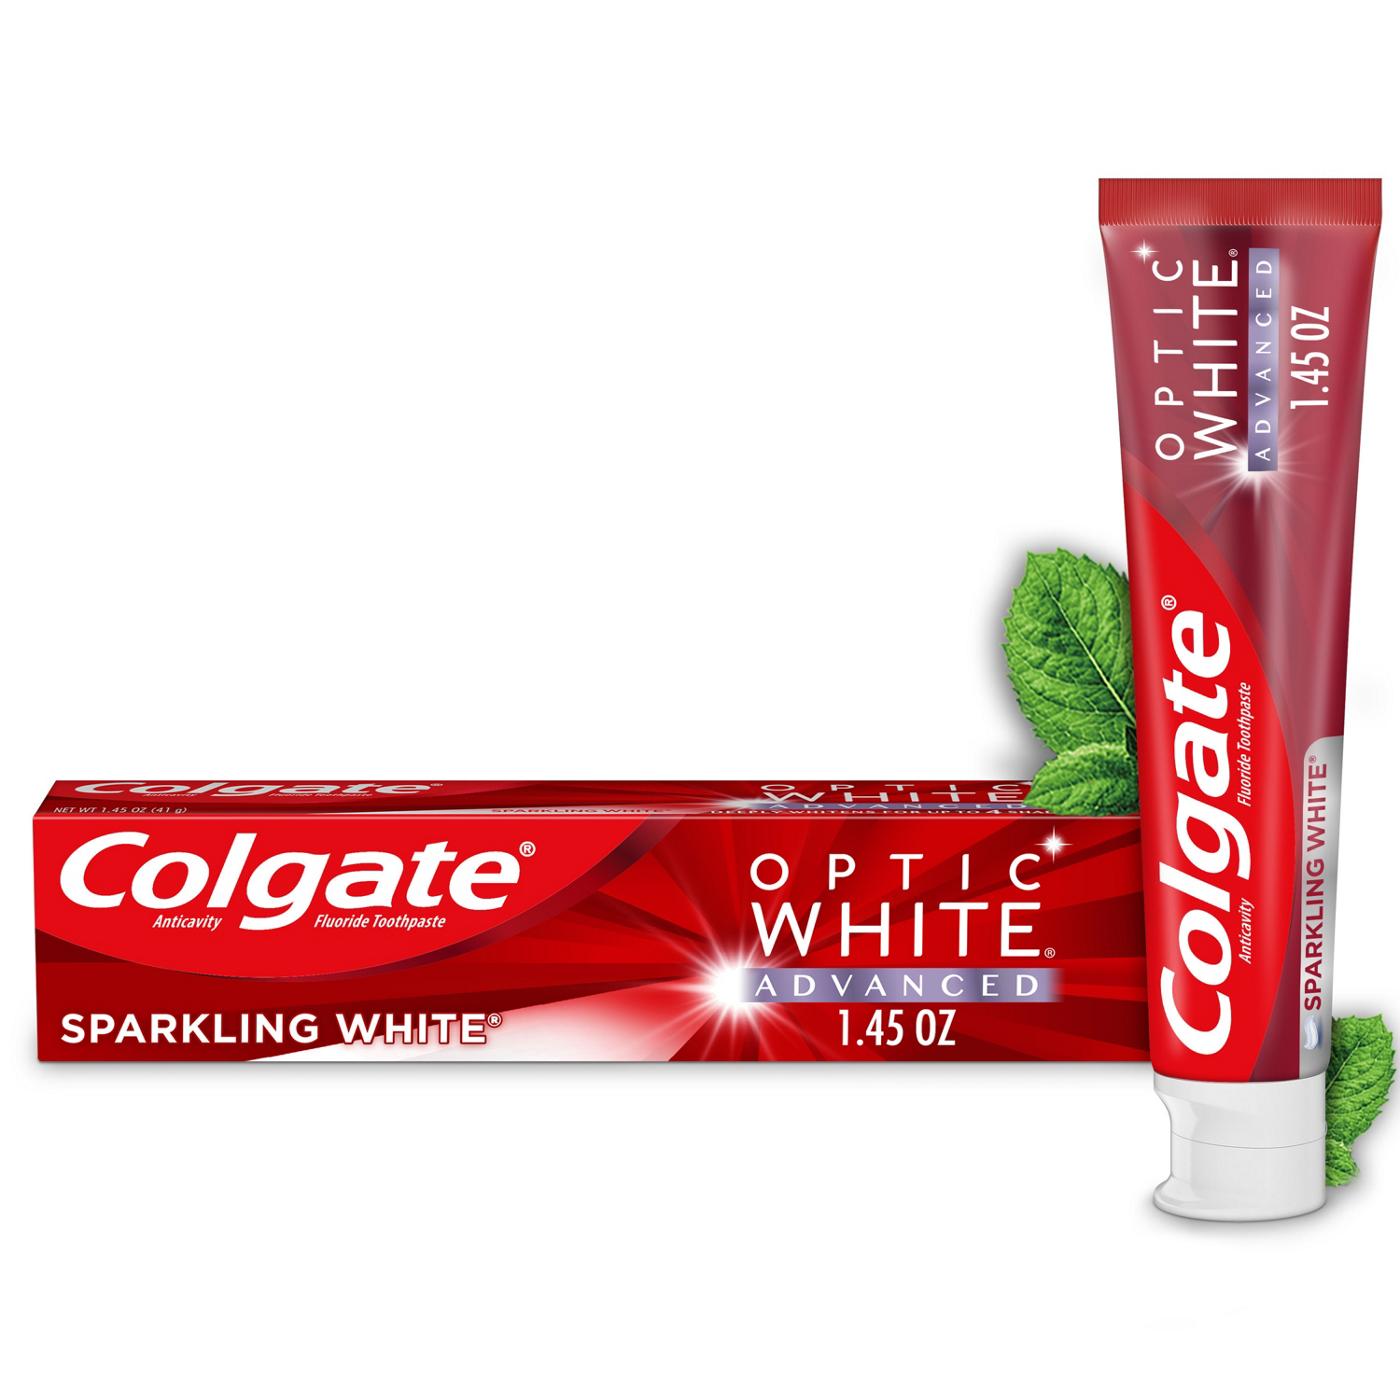 Colgate Optic White Advanced Anticavity Toothpaste - Sparkling White; image 7 of 10